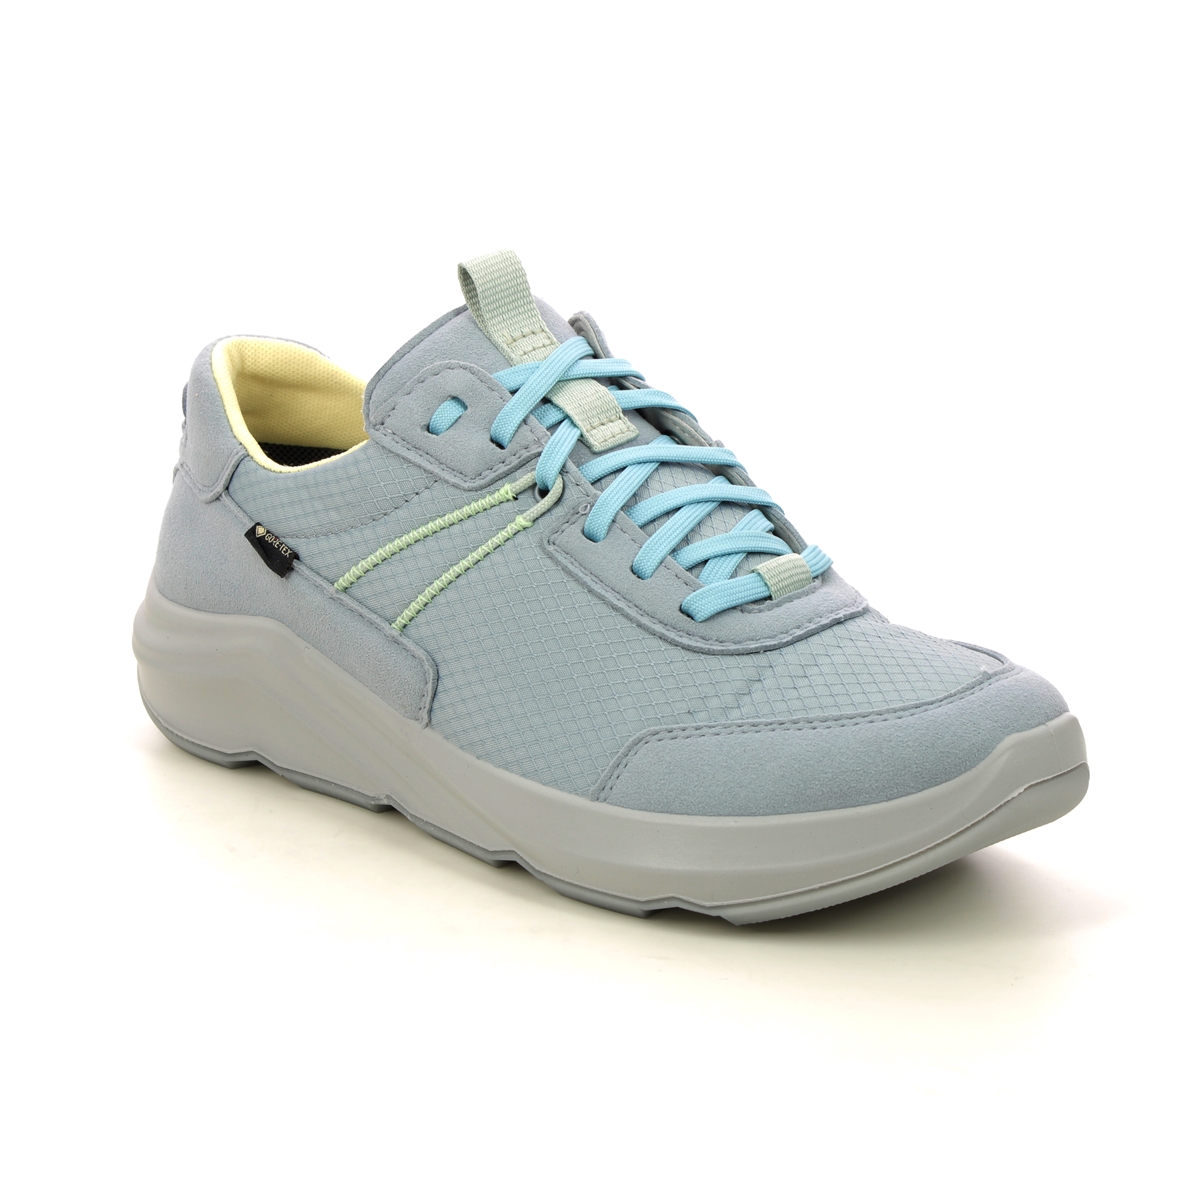 Legero Bliss Gtx Wide Light blue Womens Walking Shoes 2000318-8500 in a Plain Textile in Size 5